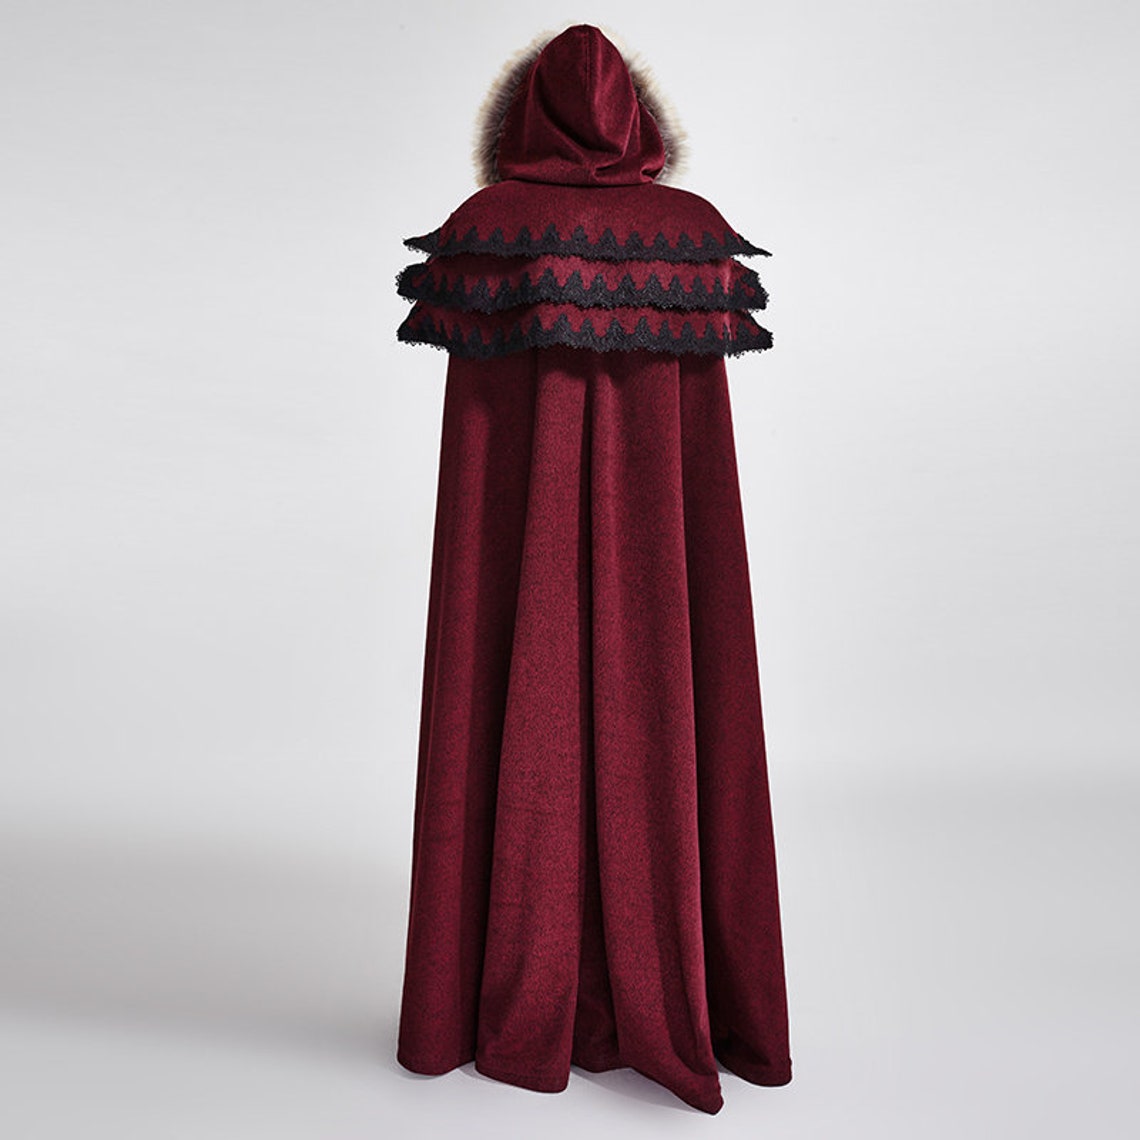 Hooded Red Cloak Faux Fur Accent Cape Warm Long Coat Men | Etsy